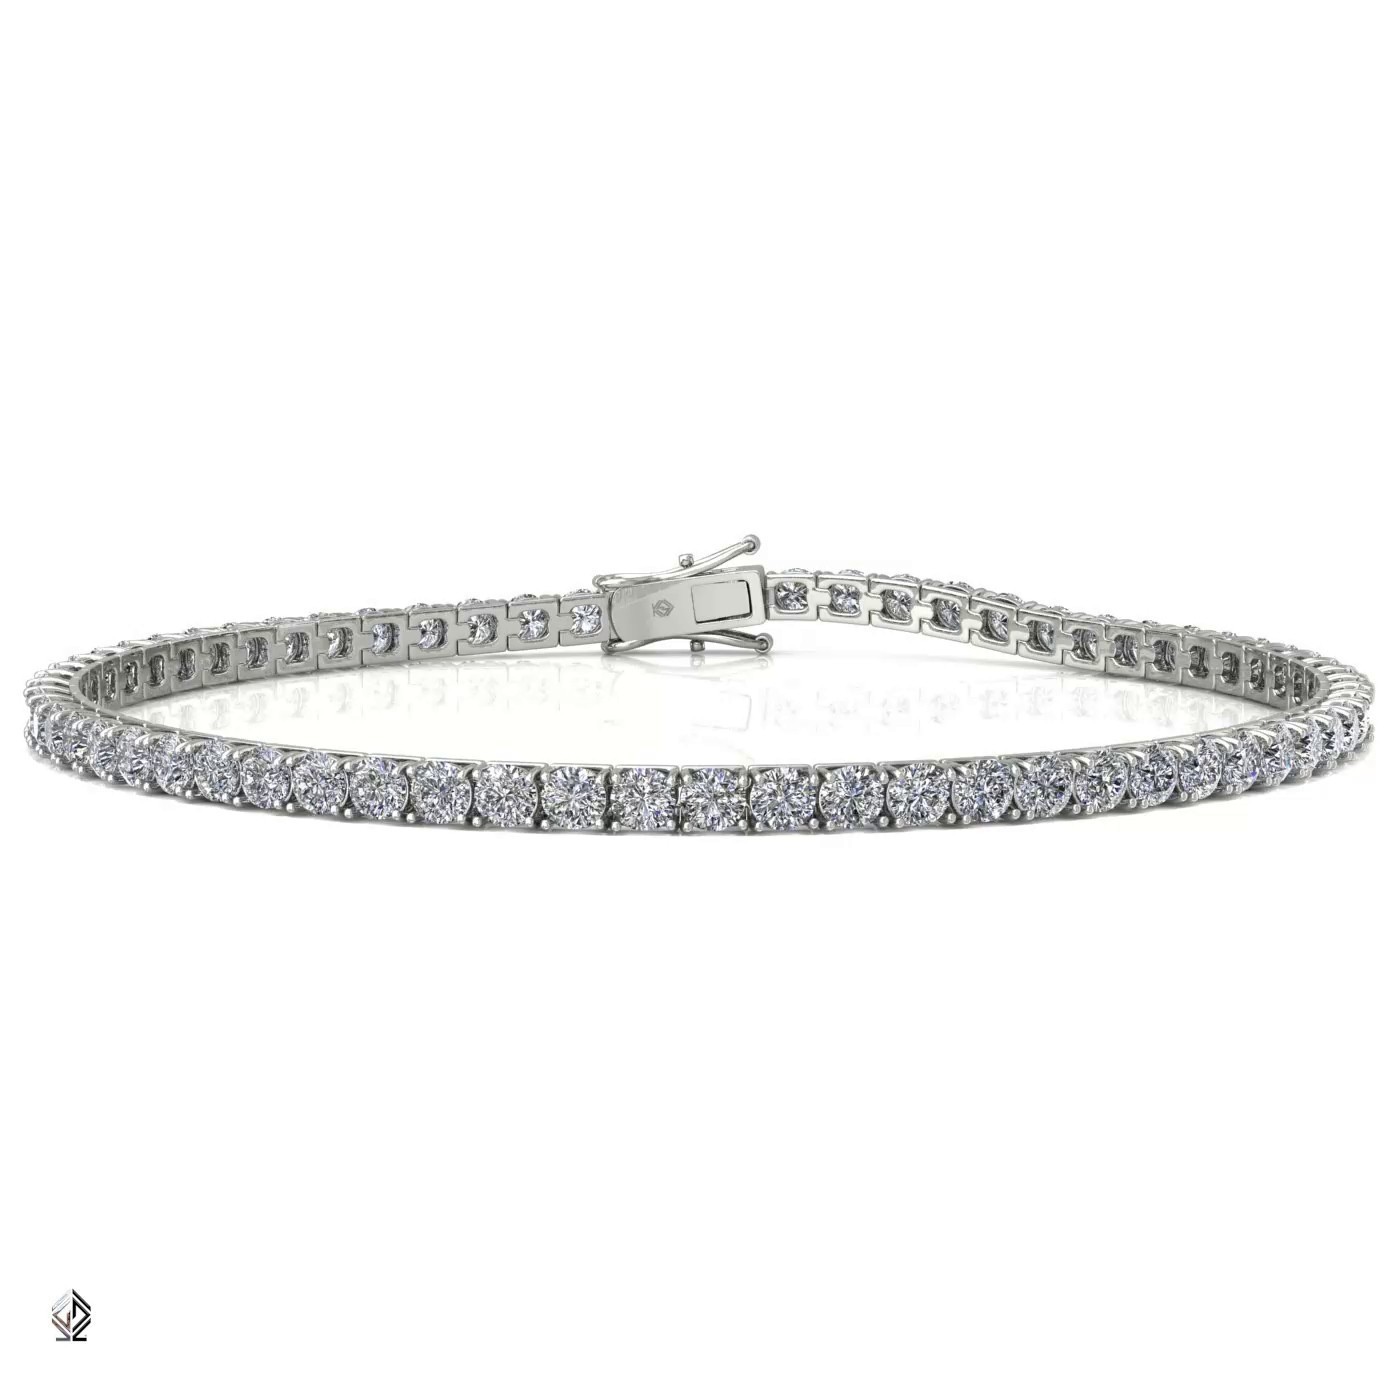 18k white gold 2.4mm 4 prong round shape diamond tennis bracelet in square setting Photos & images